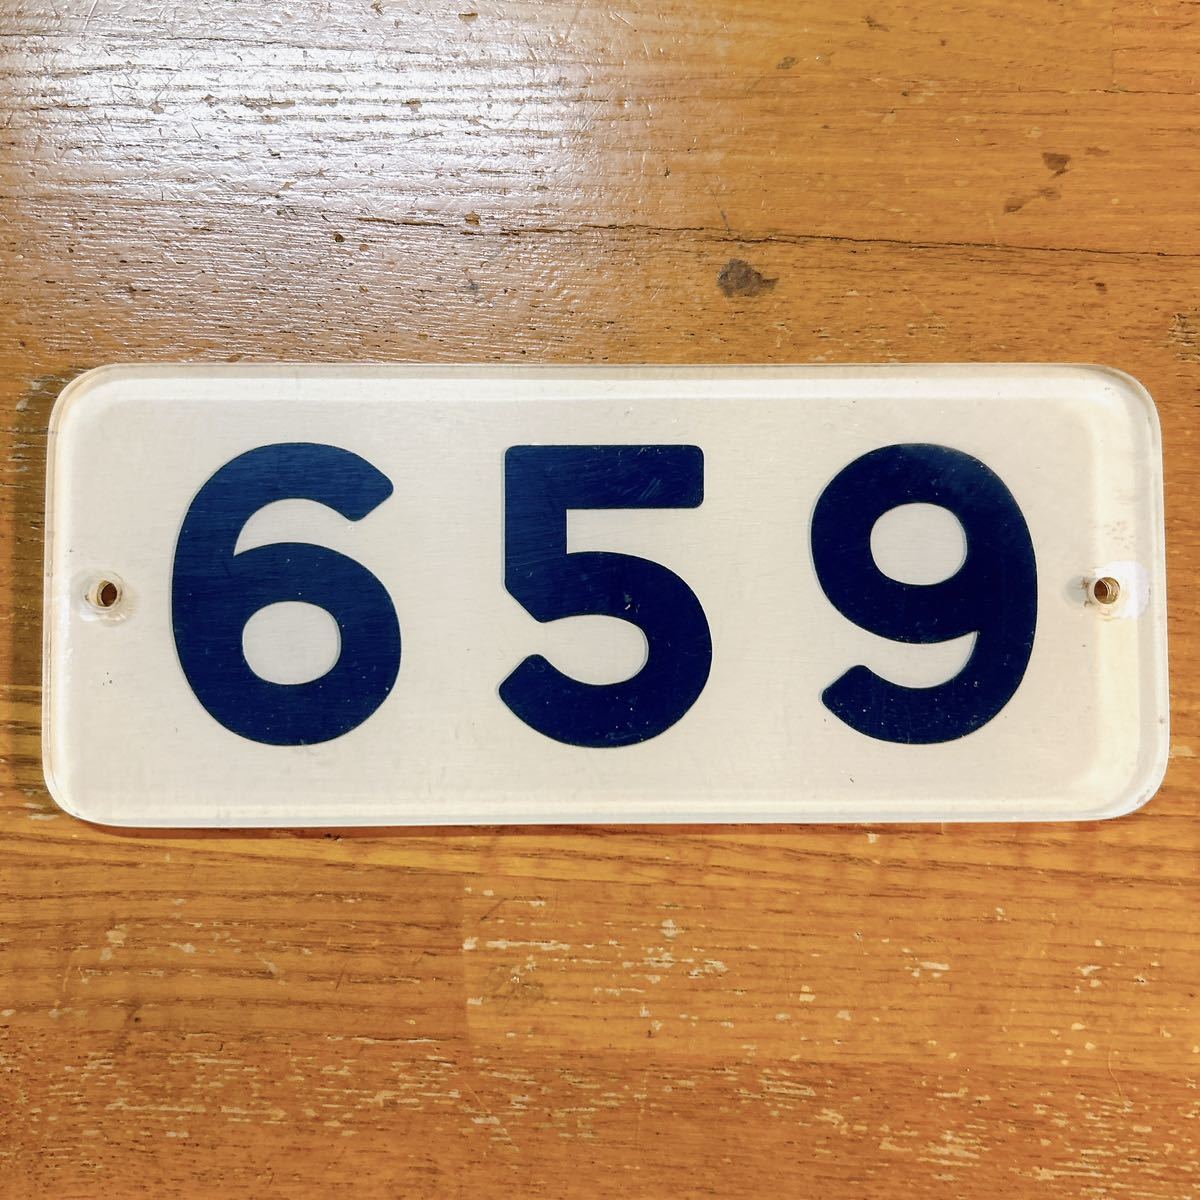 京阪 659 車内形式板 プレート 番号板